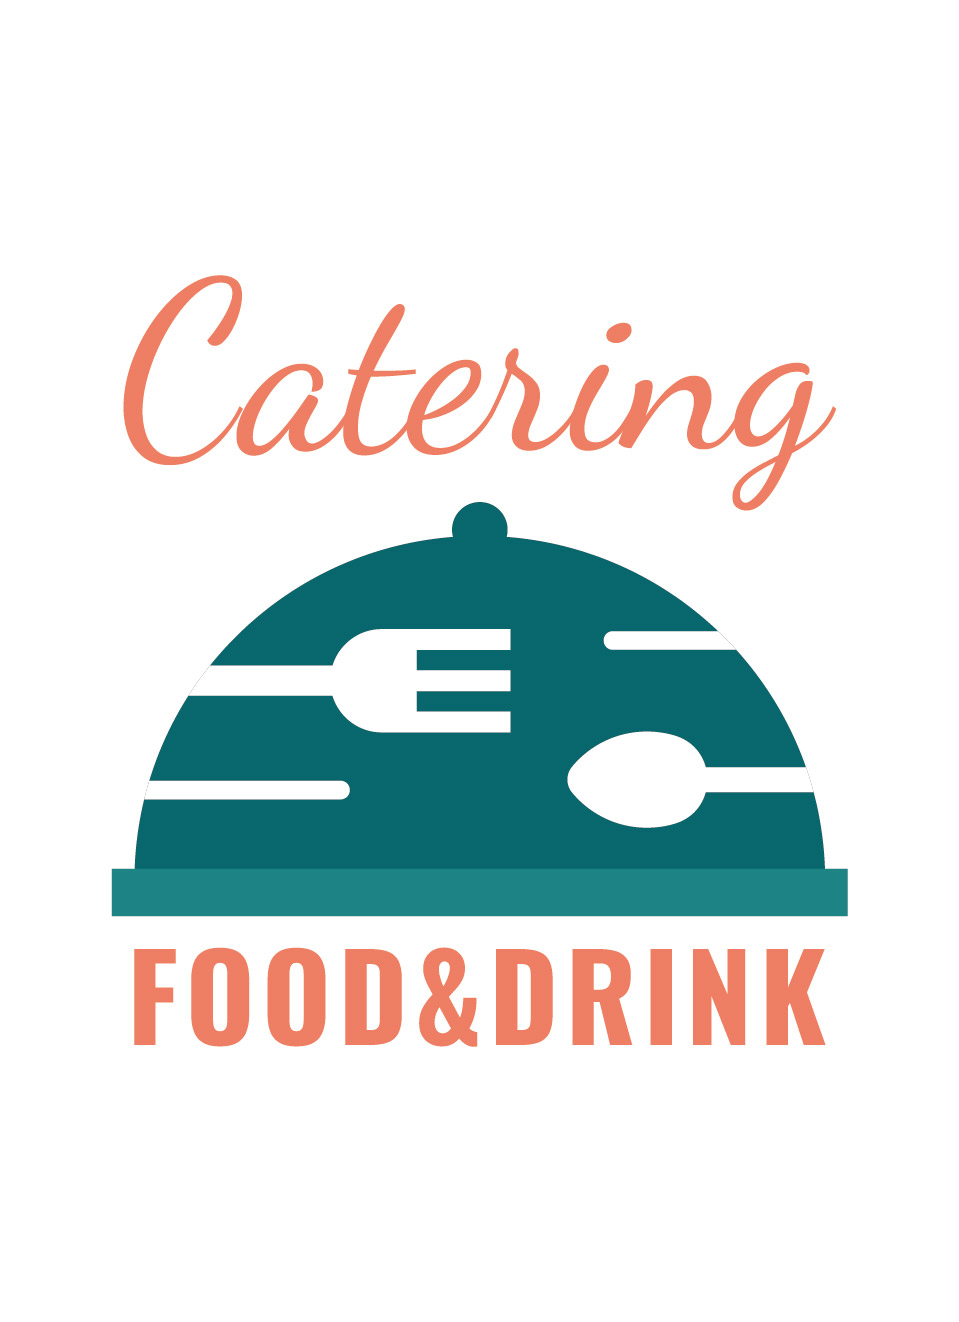 Restaurant Logo Vector: How to Design a Logo for Your Restaurant